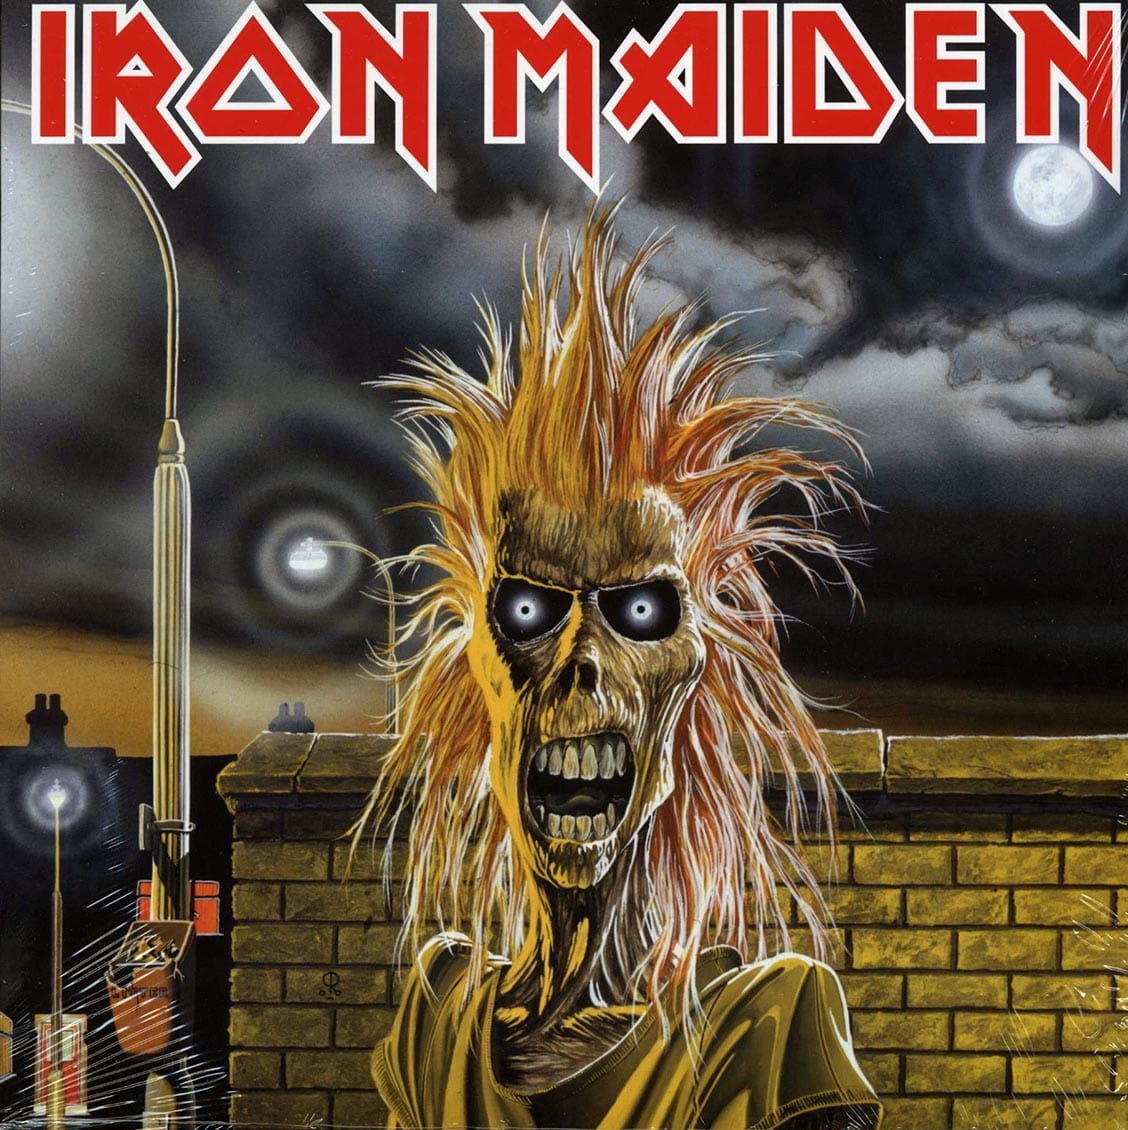 IRON MAIDEN: Self-Titled LP (180gr vinyl)